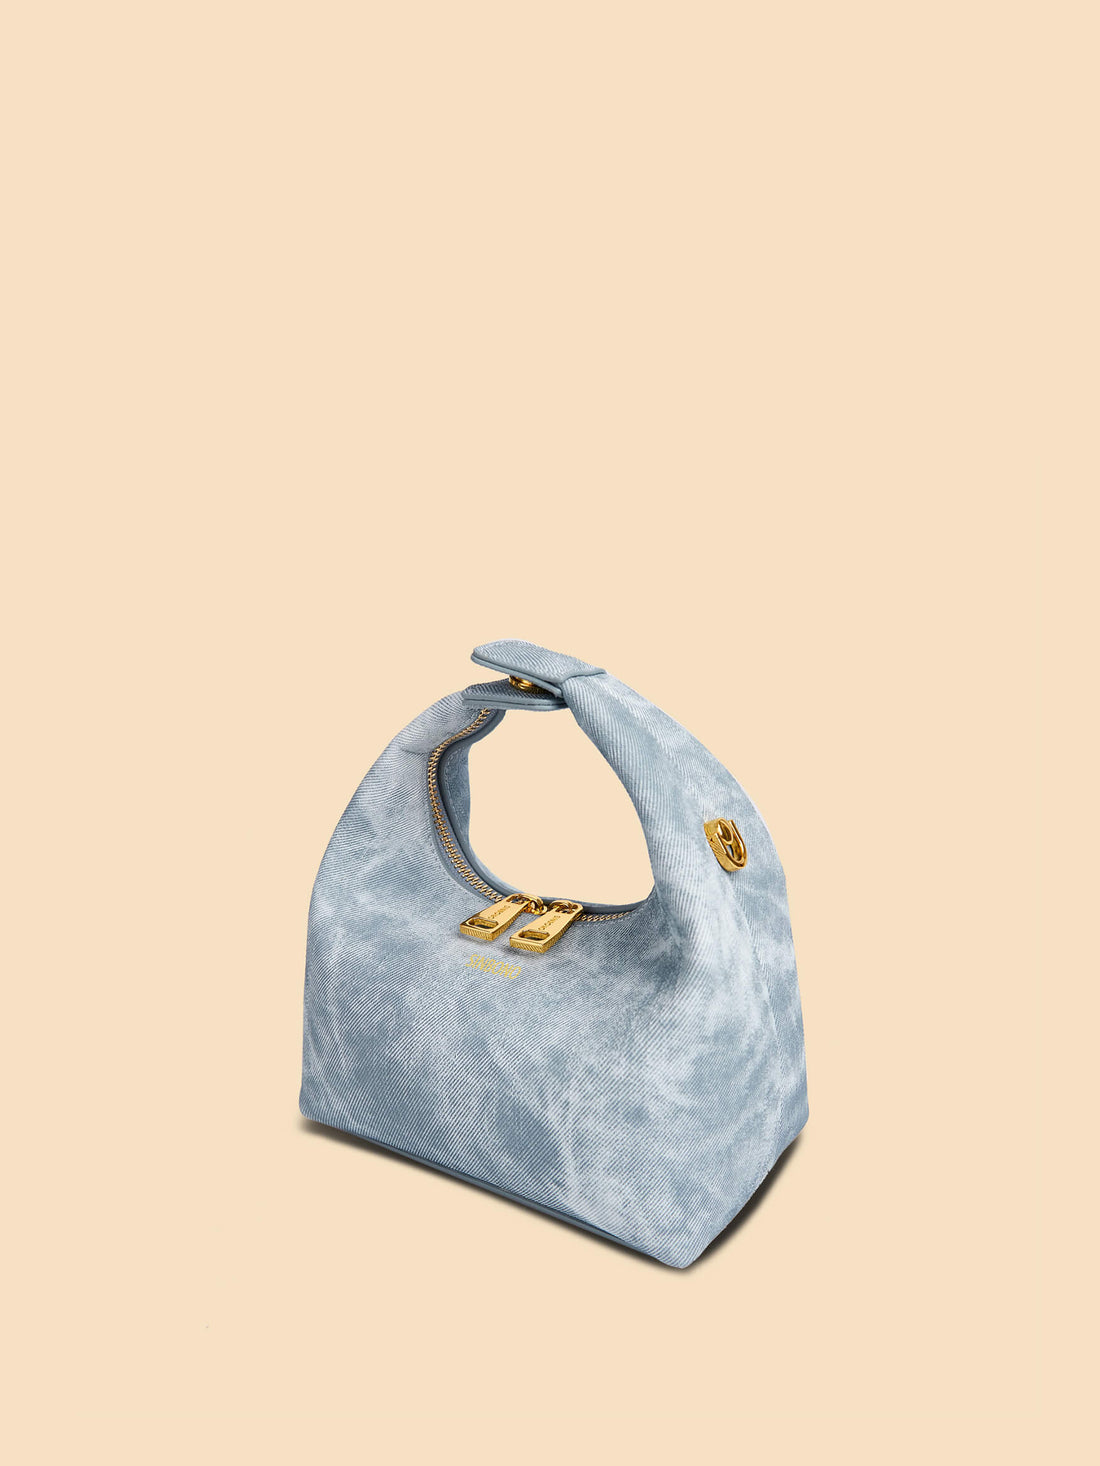 SINBONO Vienna Mist Blue Leather Handbags -Vegan Leather Women Bag